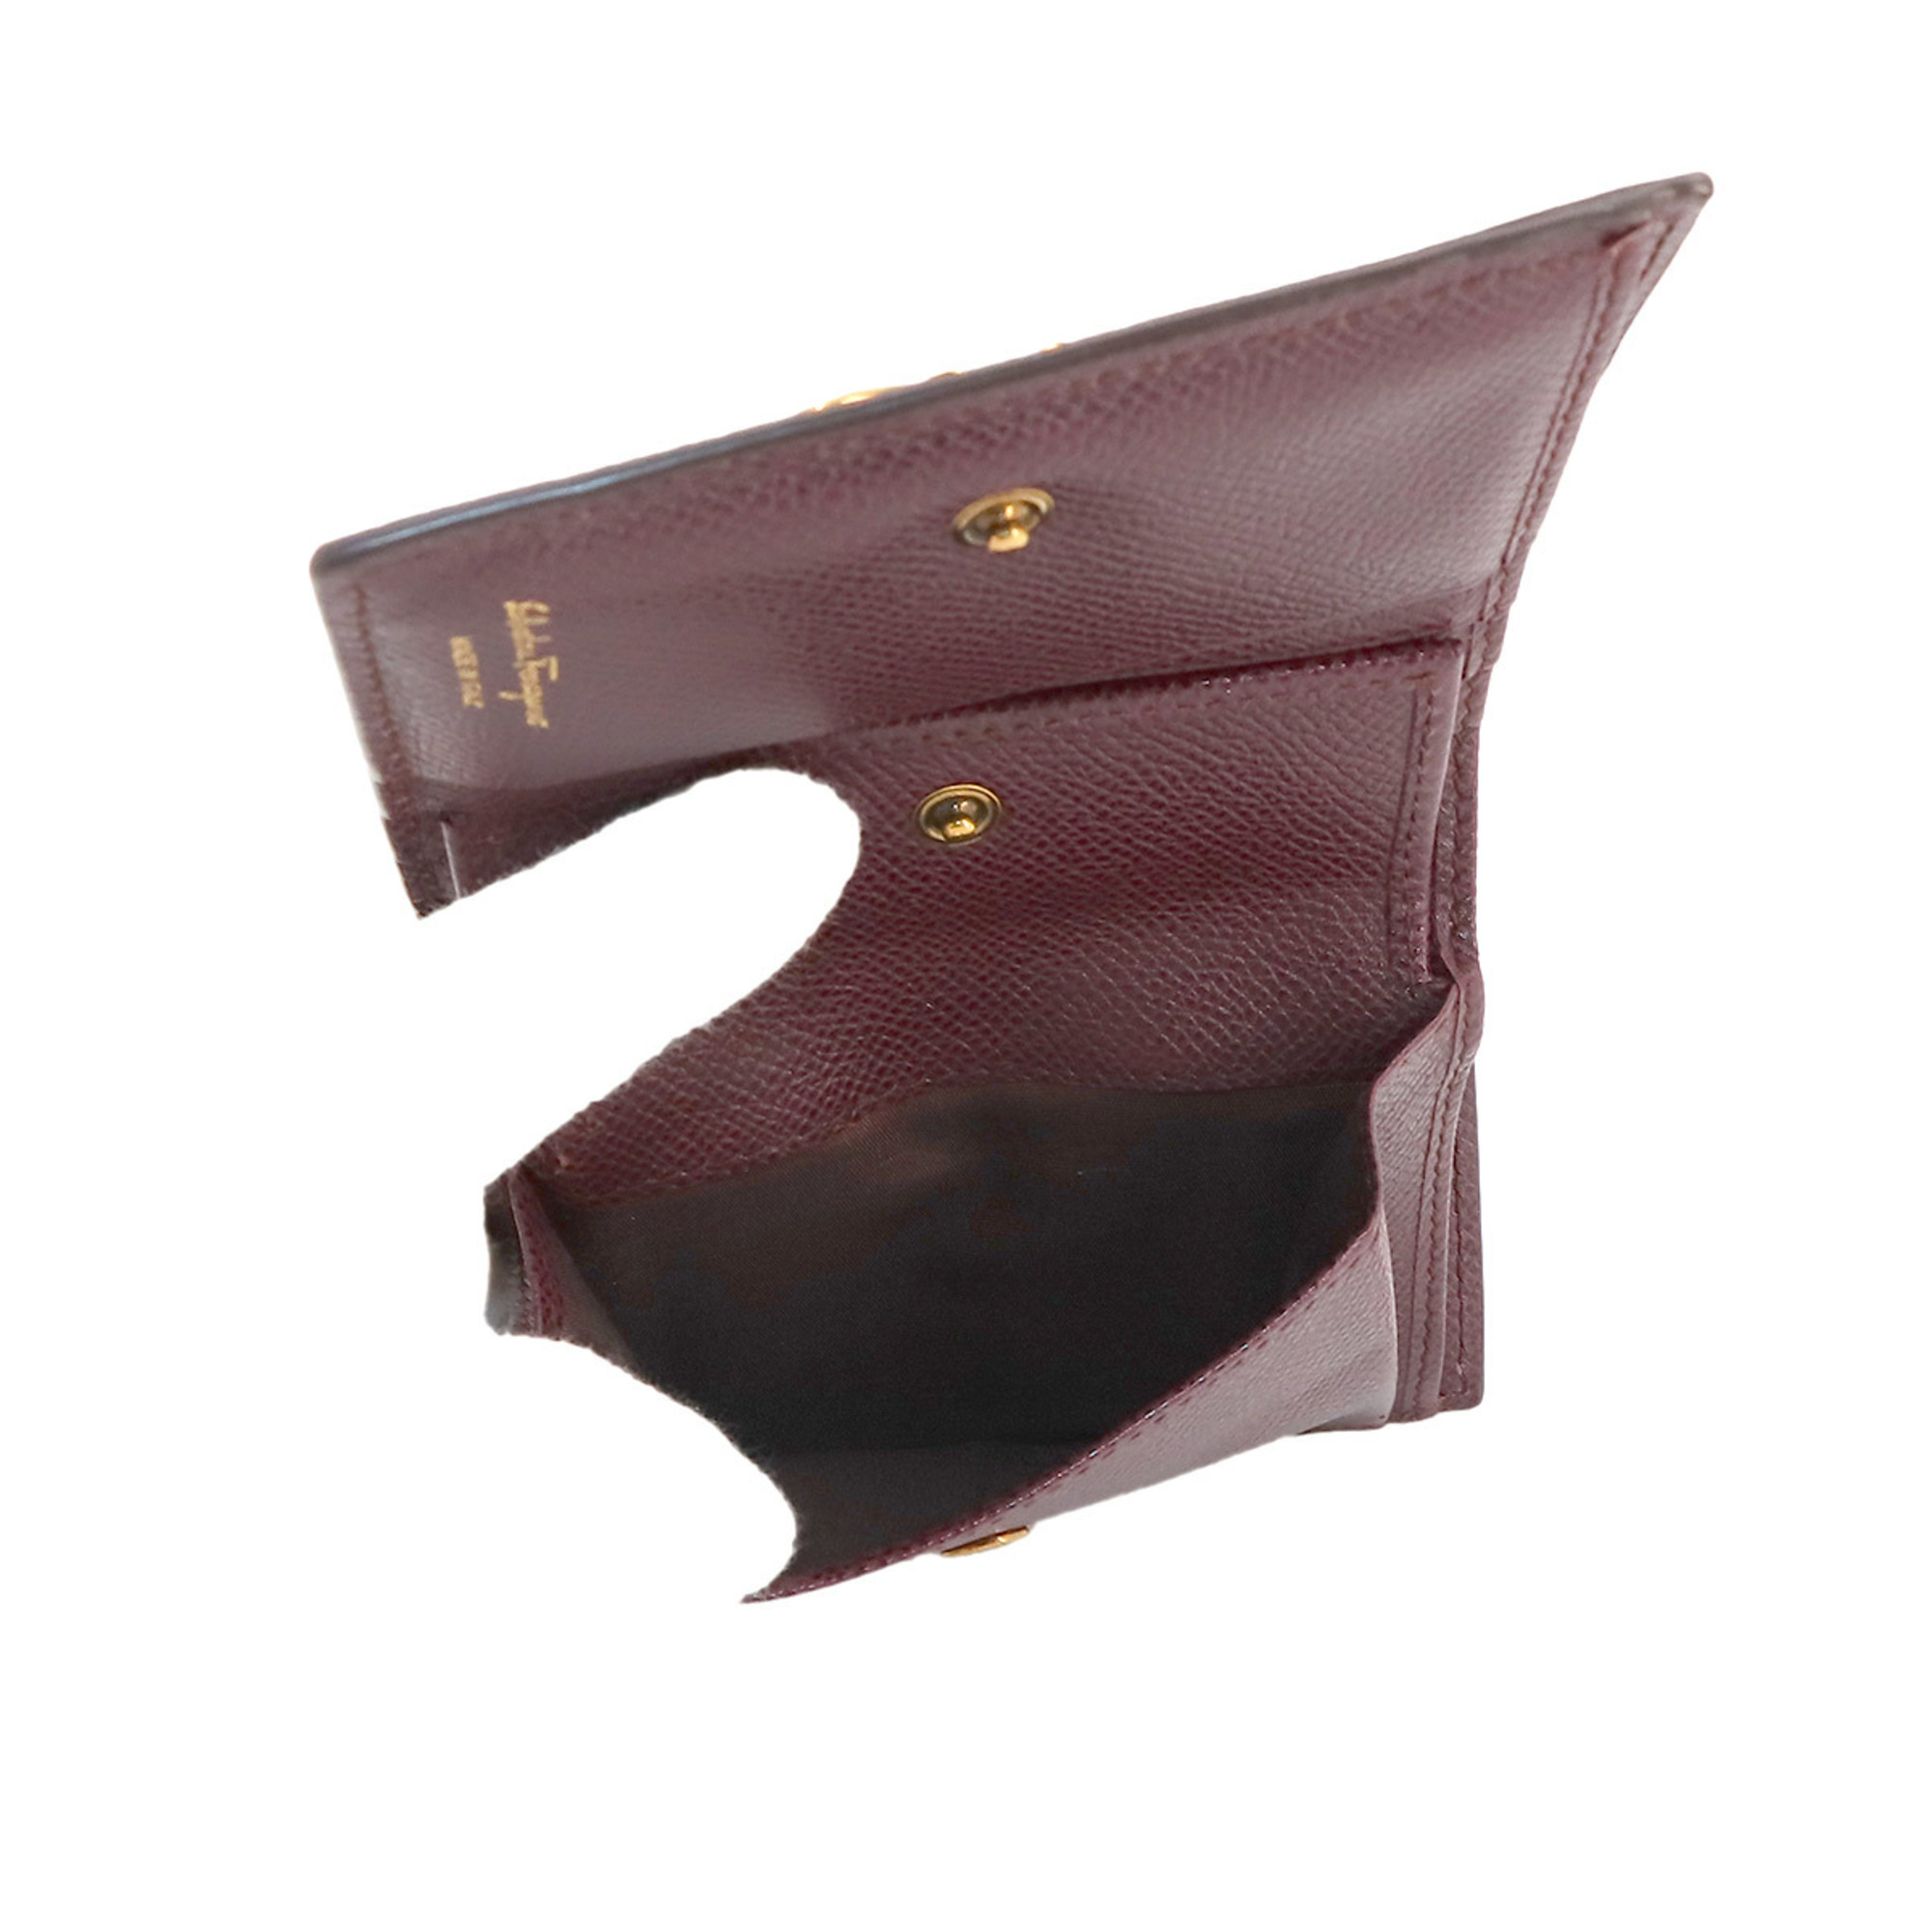 Salvatore Ferragamo Gancini Compact Wallet, Bi-fold Leather, Bordeaux